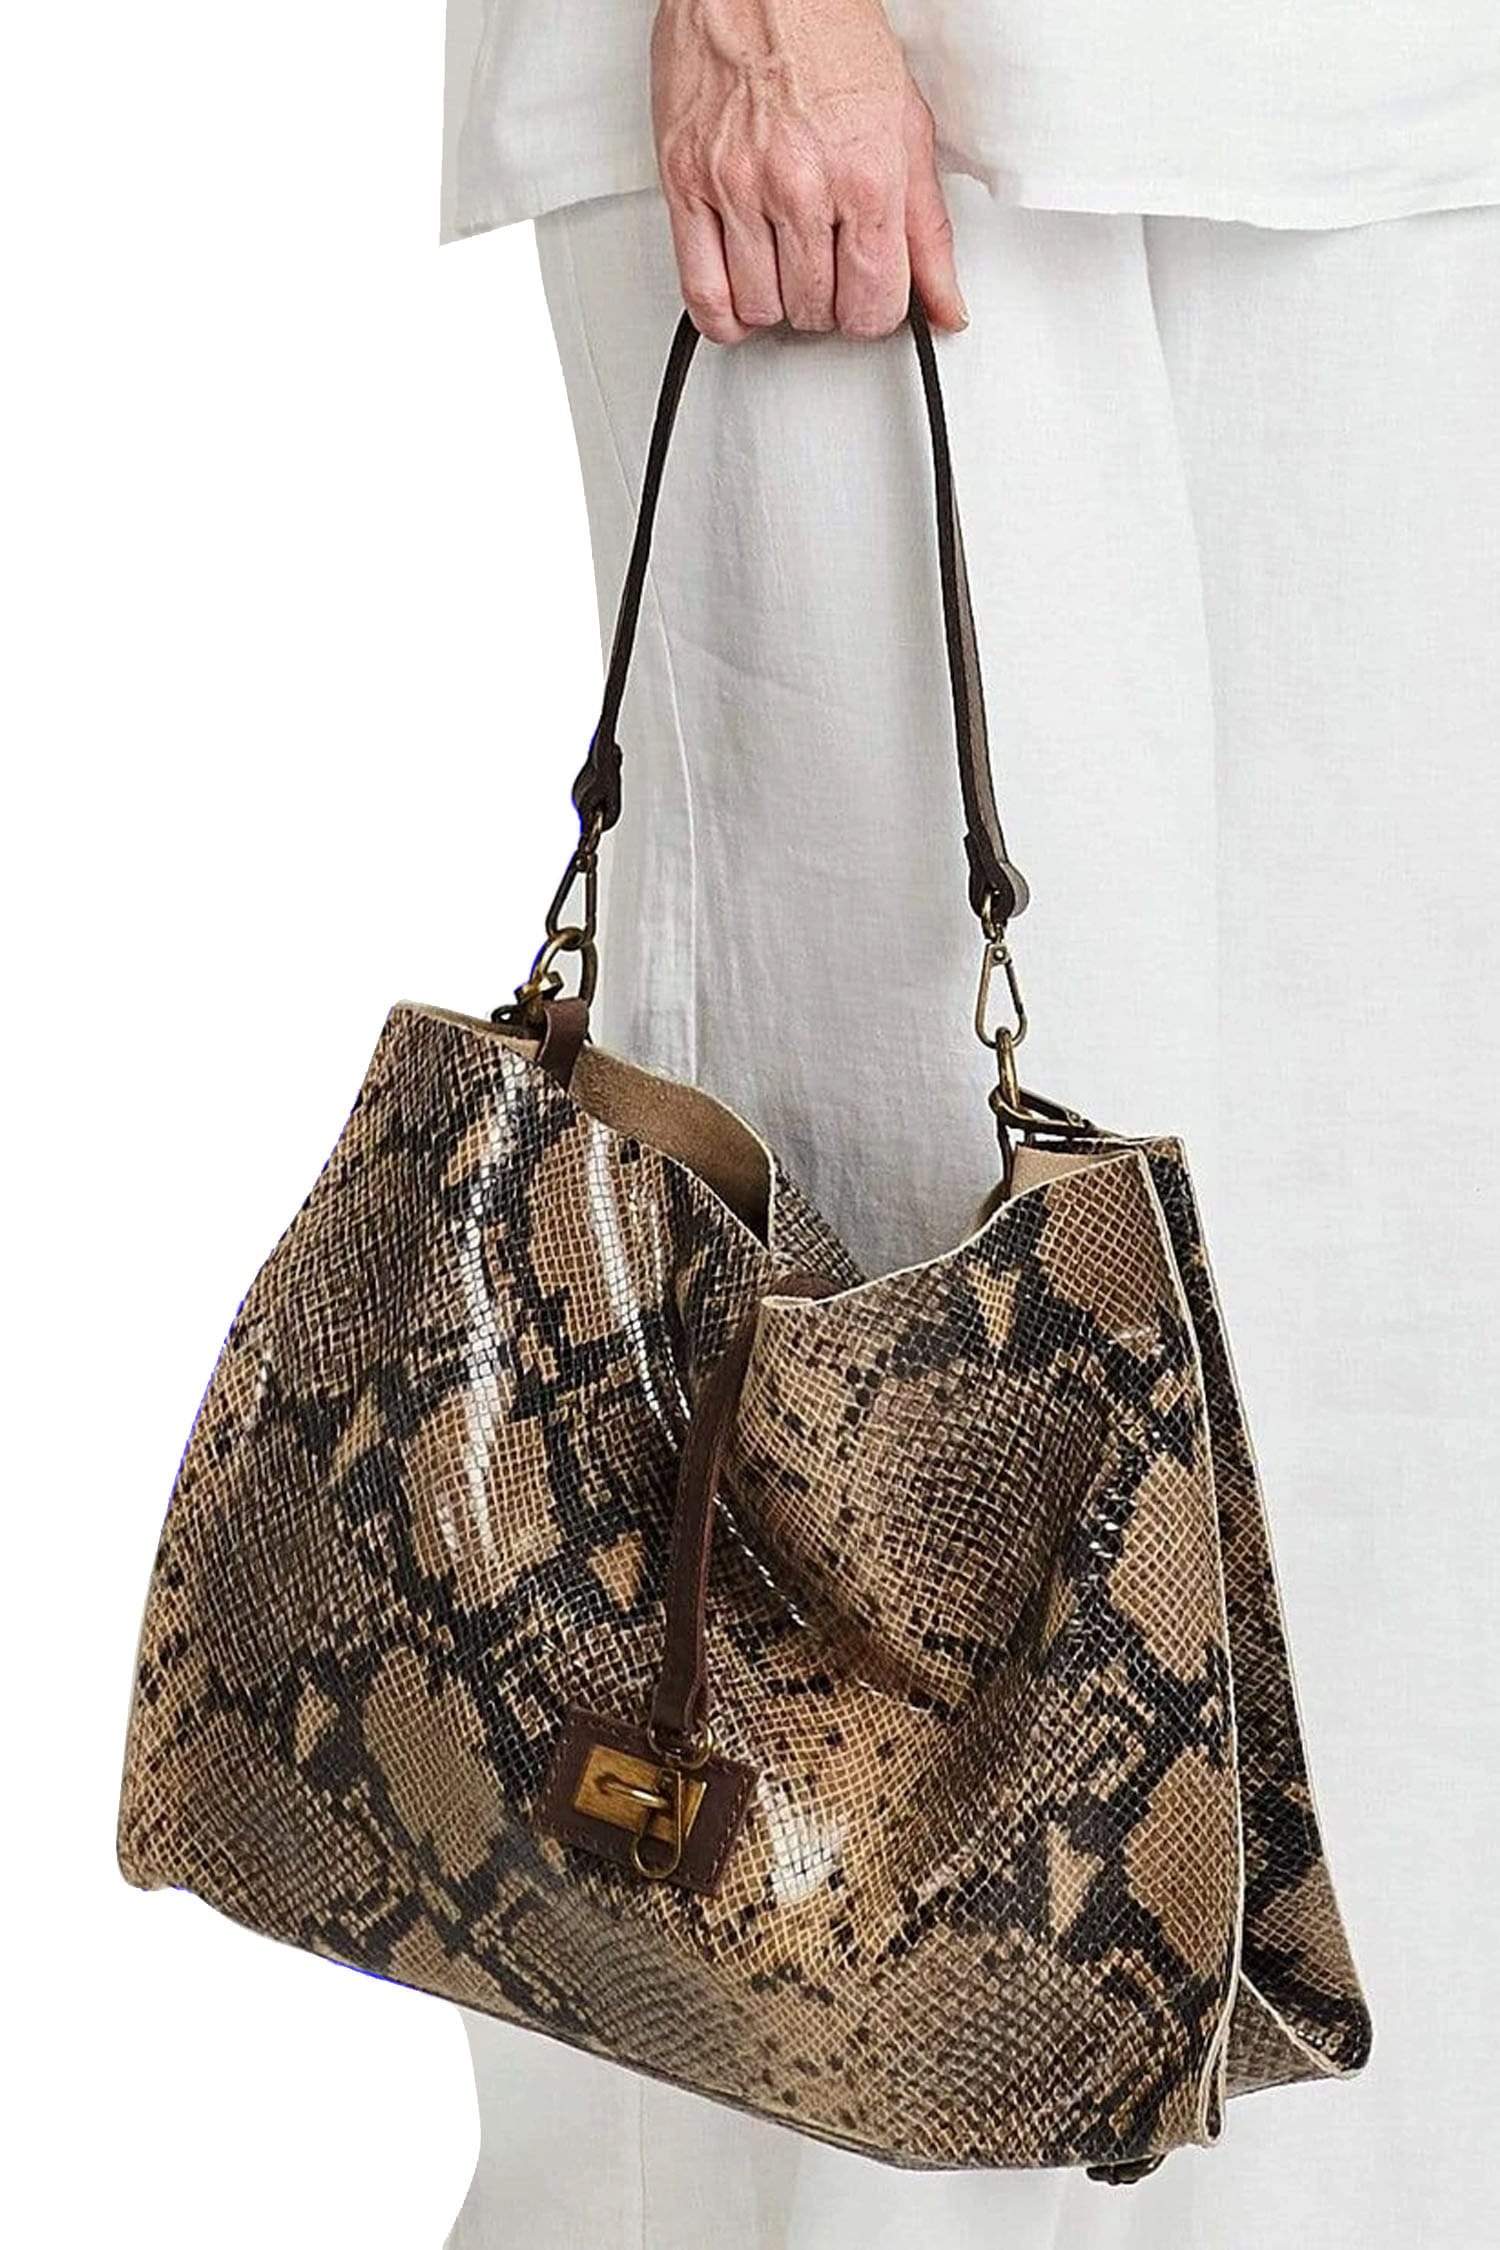 Calvin Klein Tote Bag Black Nylon Gold Chain Straps Zipper Shoulder Bag  Purse | eBay